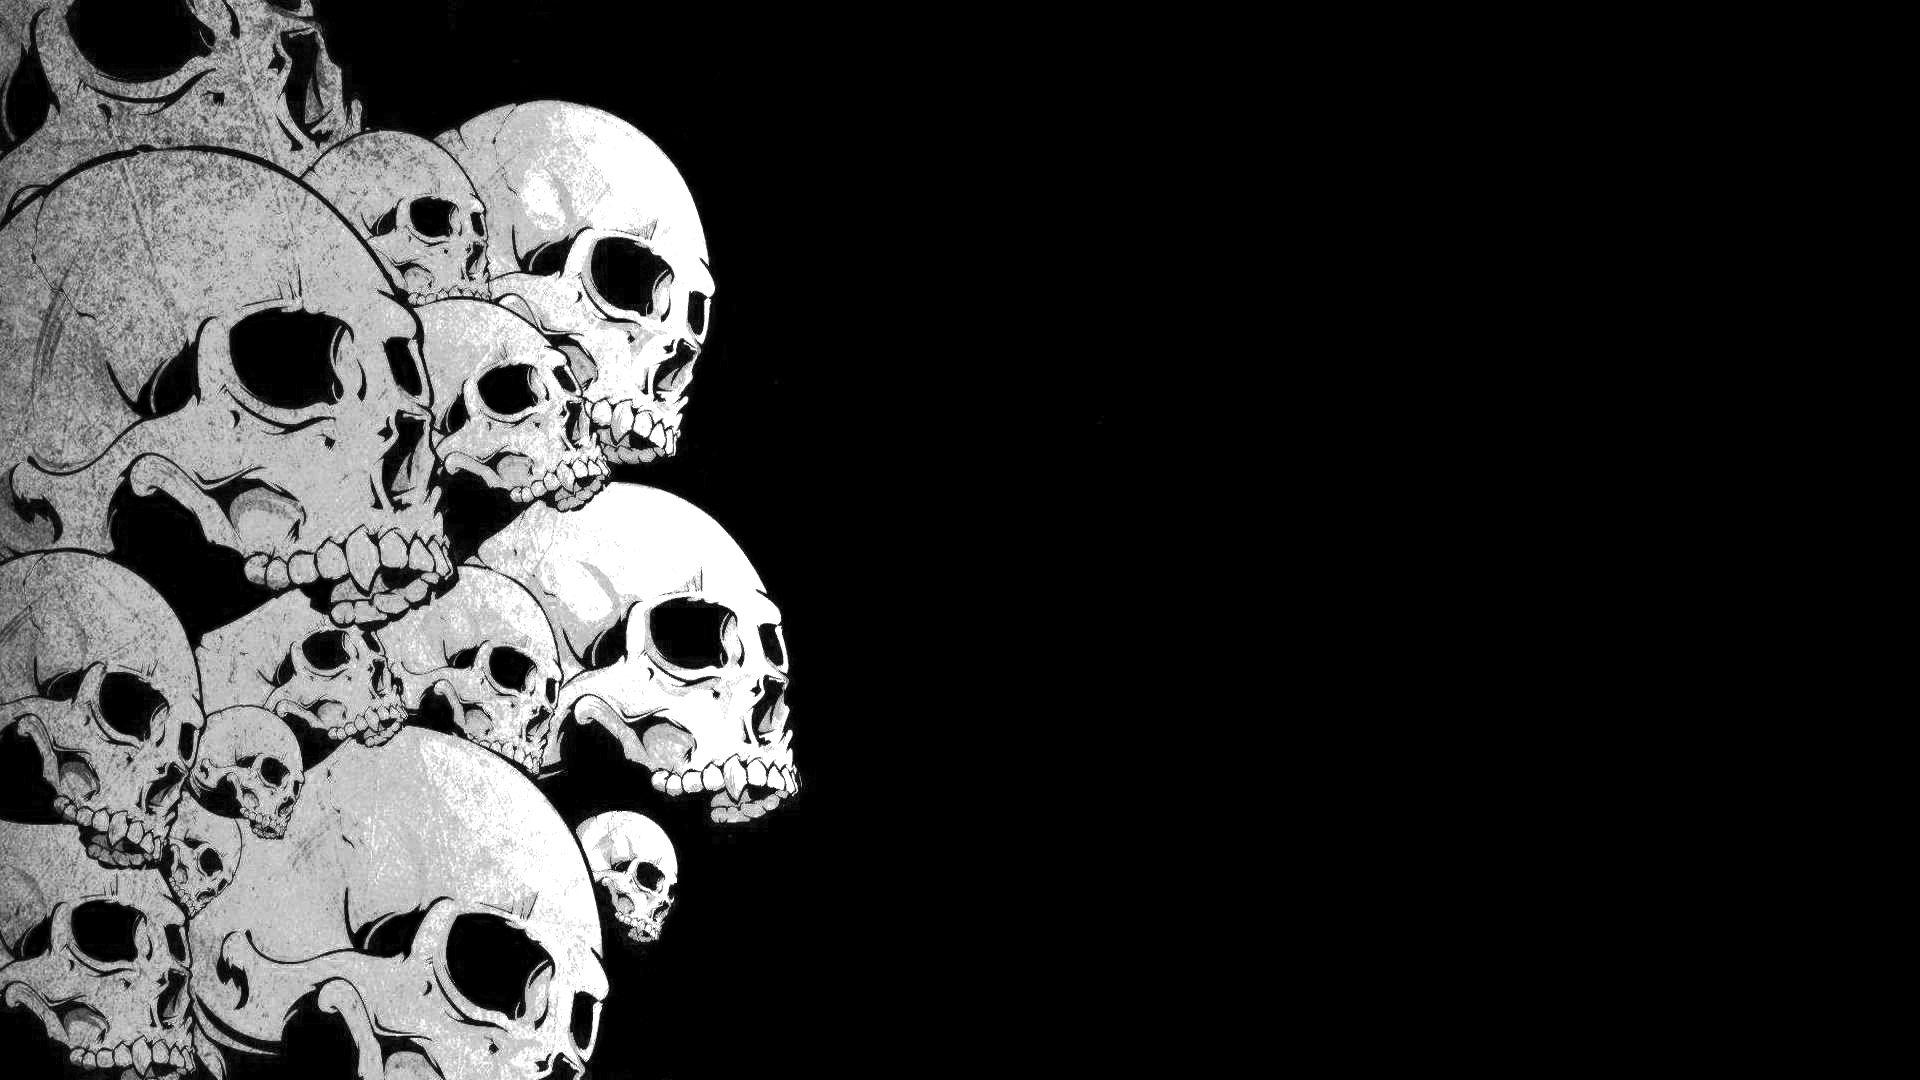 HD Skull Wallpapers 1080p : Find best latest HD Skull Wallpapers